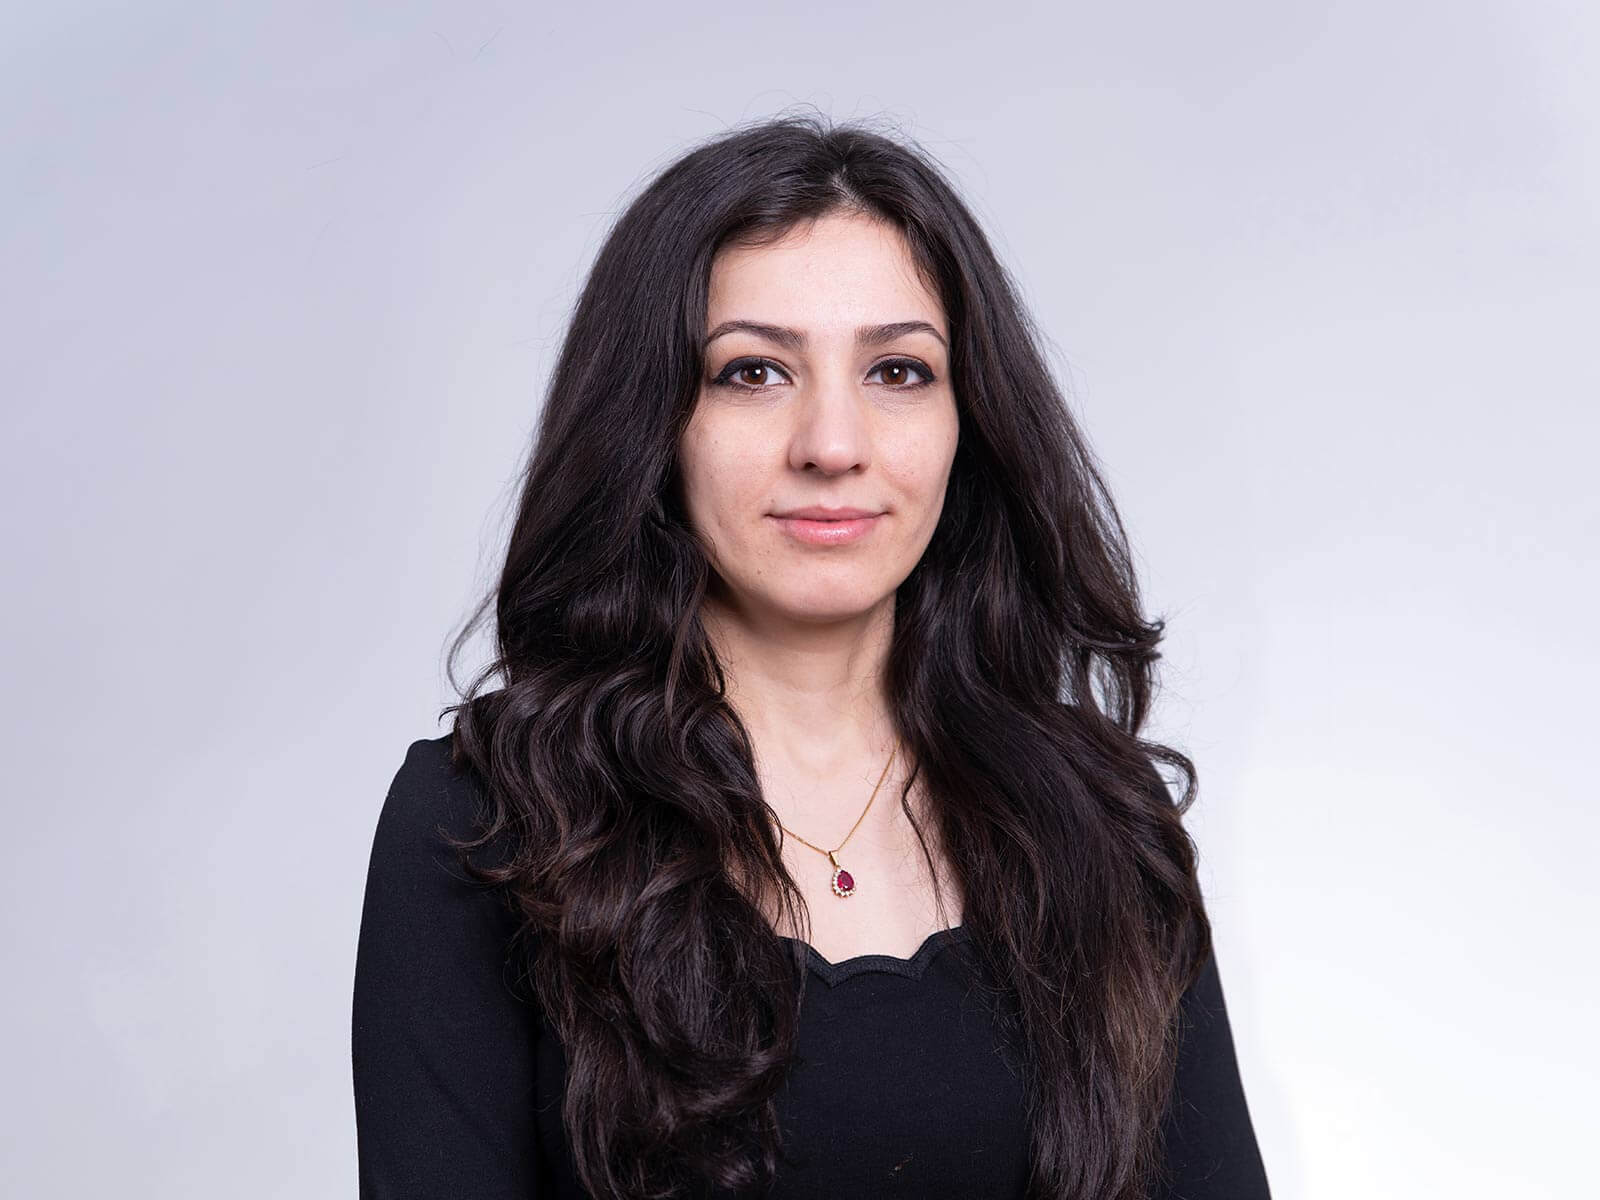 DigiPen Digital Arts instructor Zahra Haghiri